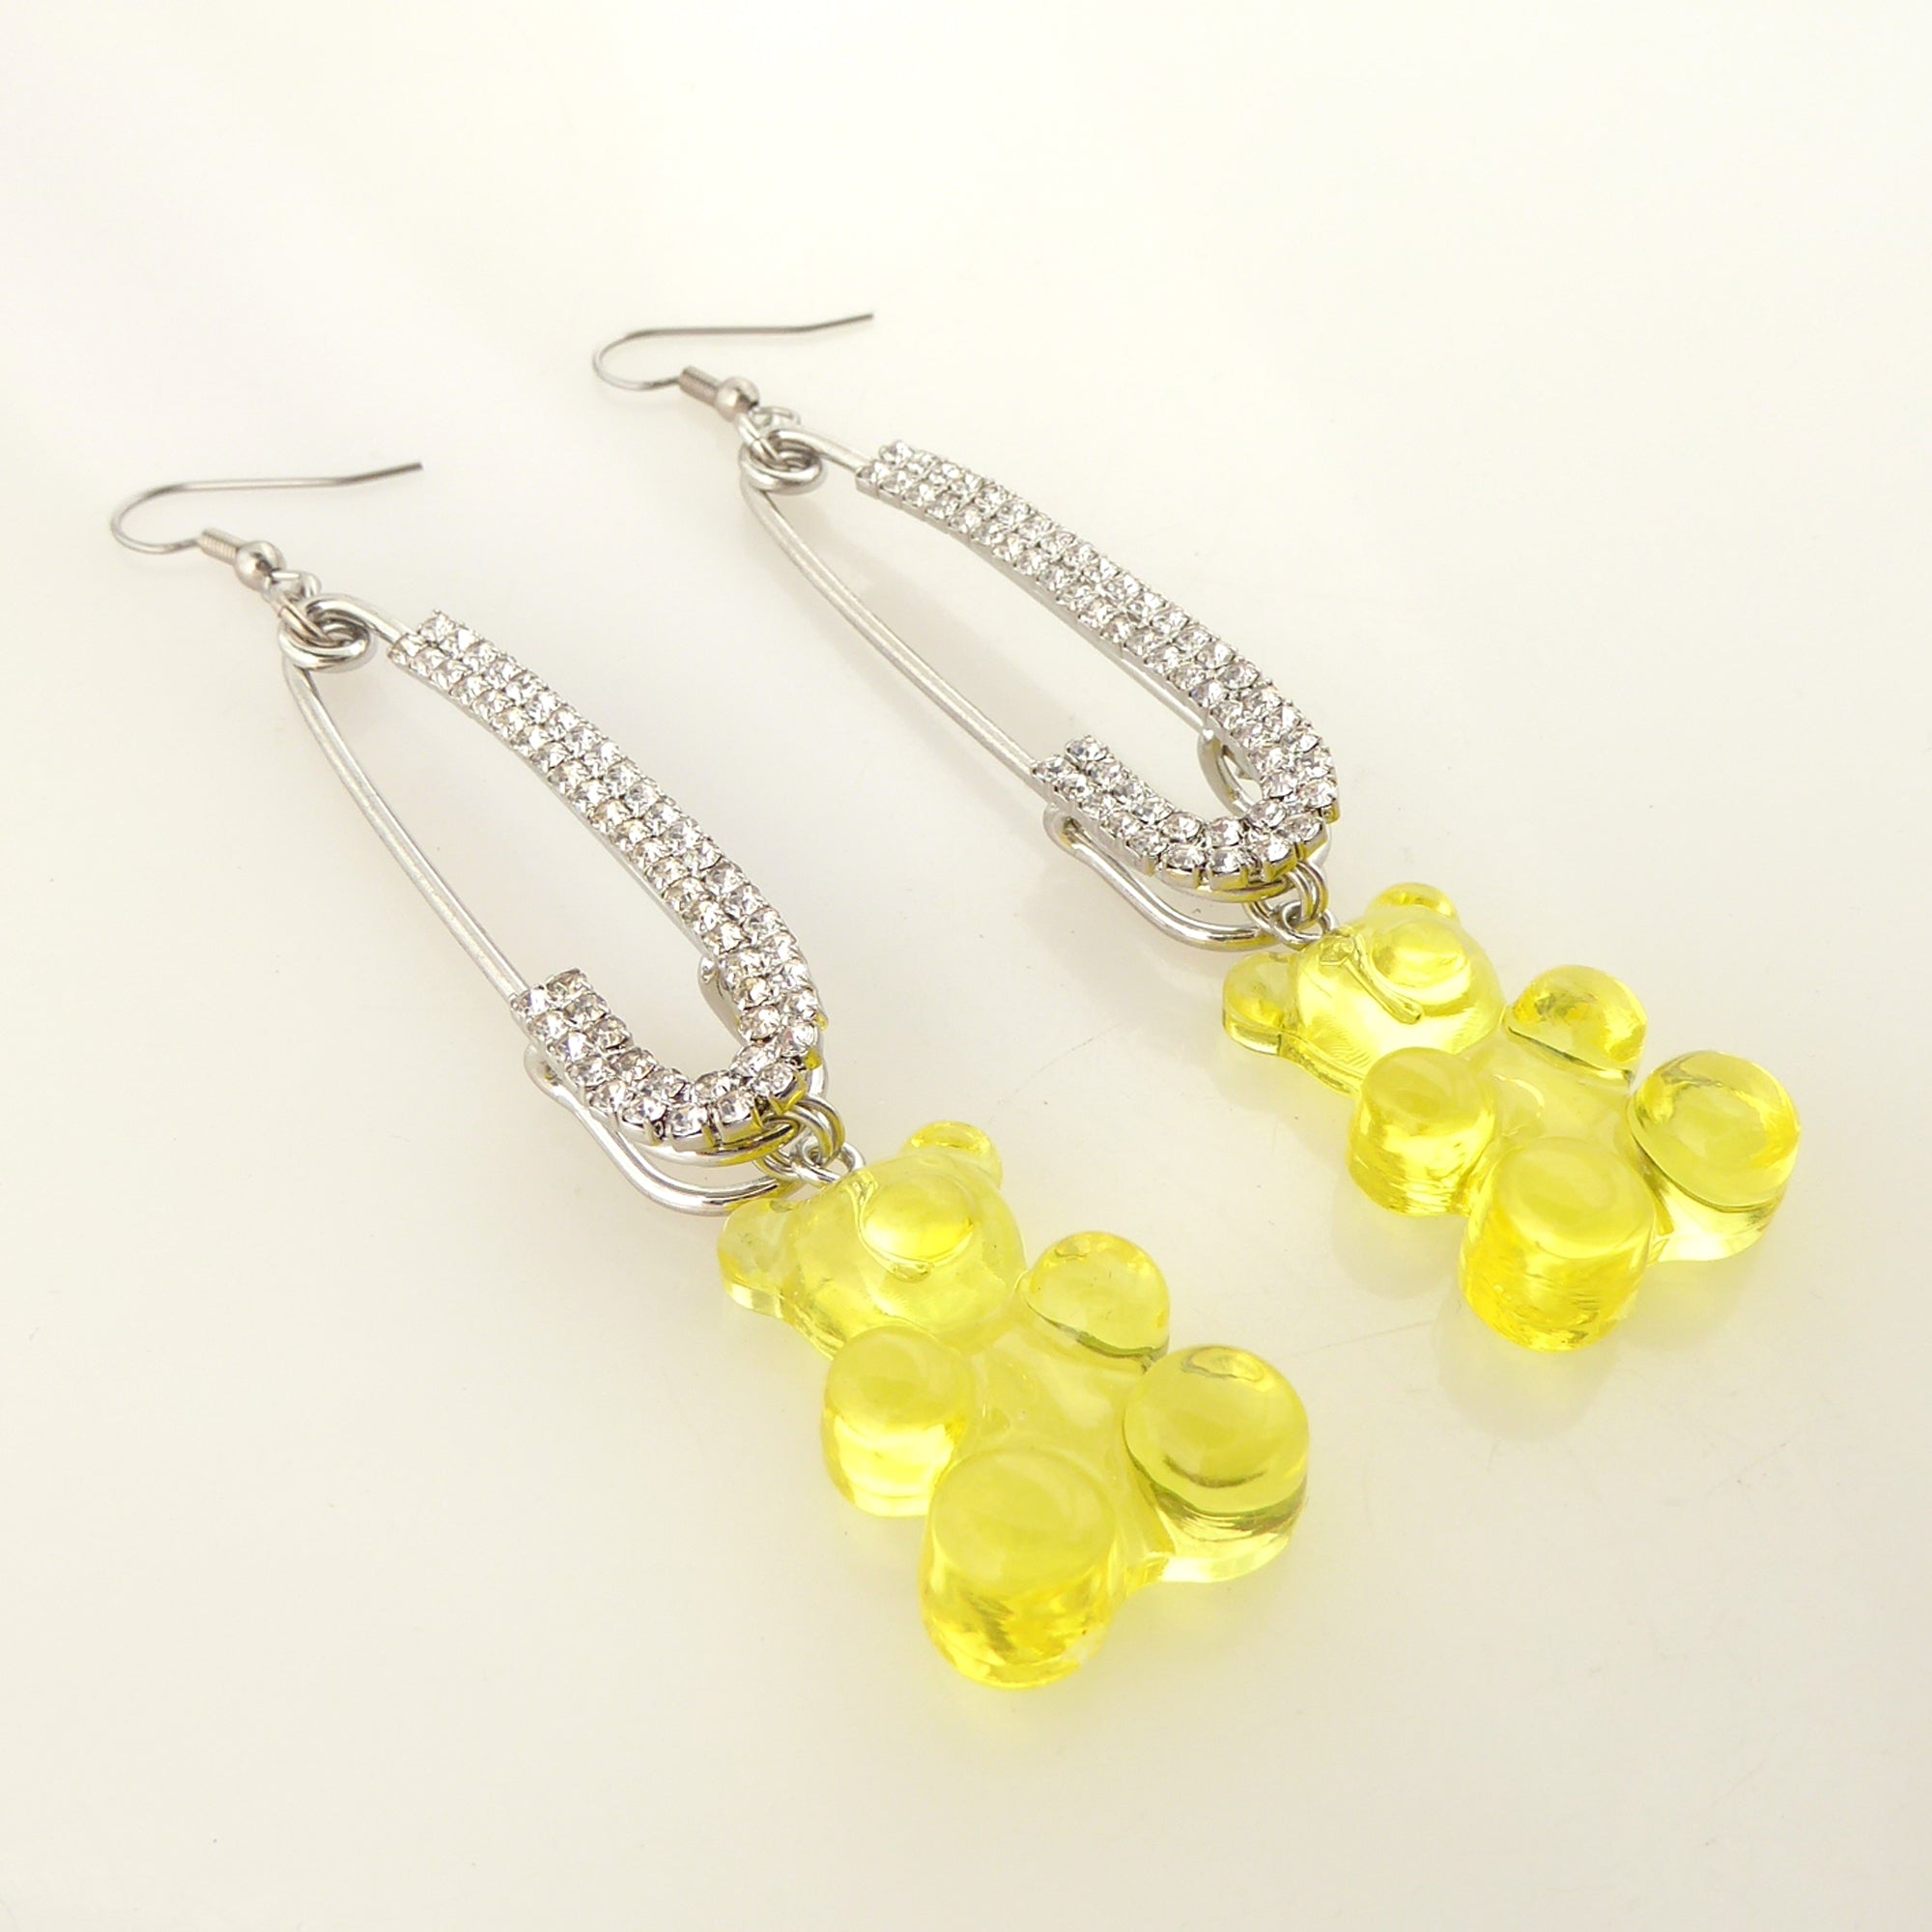 Yellow gummy bear earrings by Jenny Dayco 2